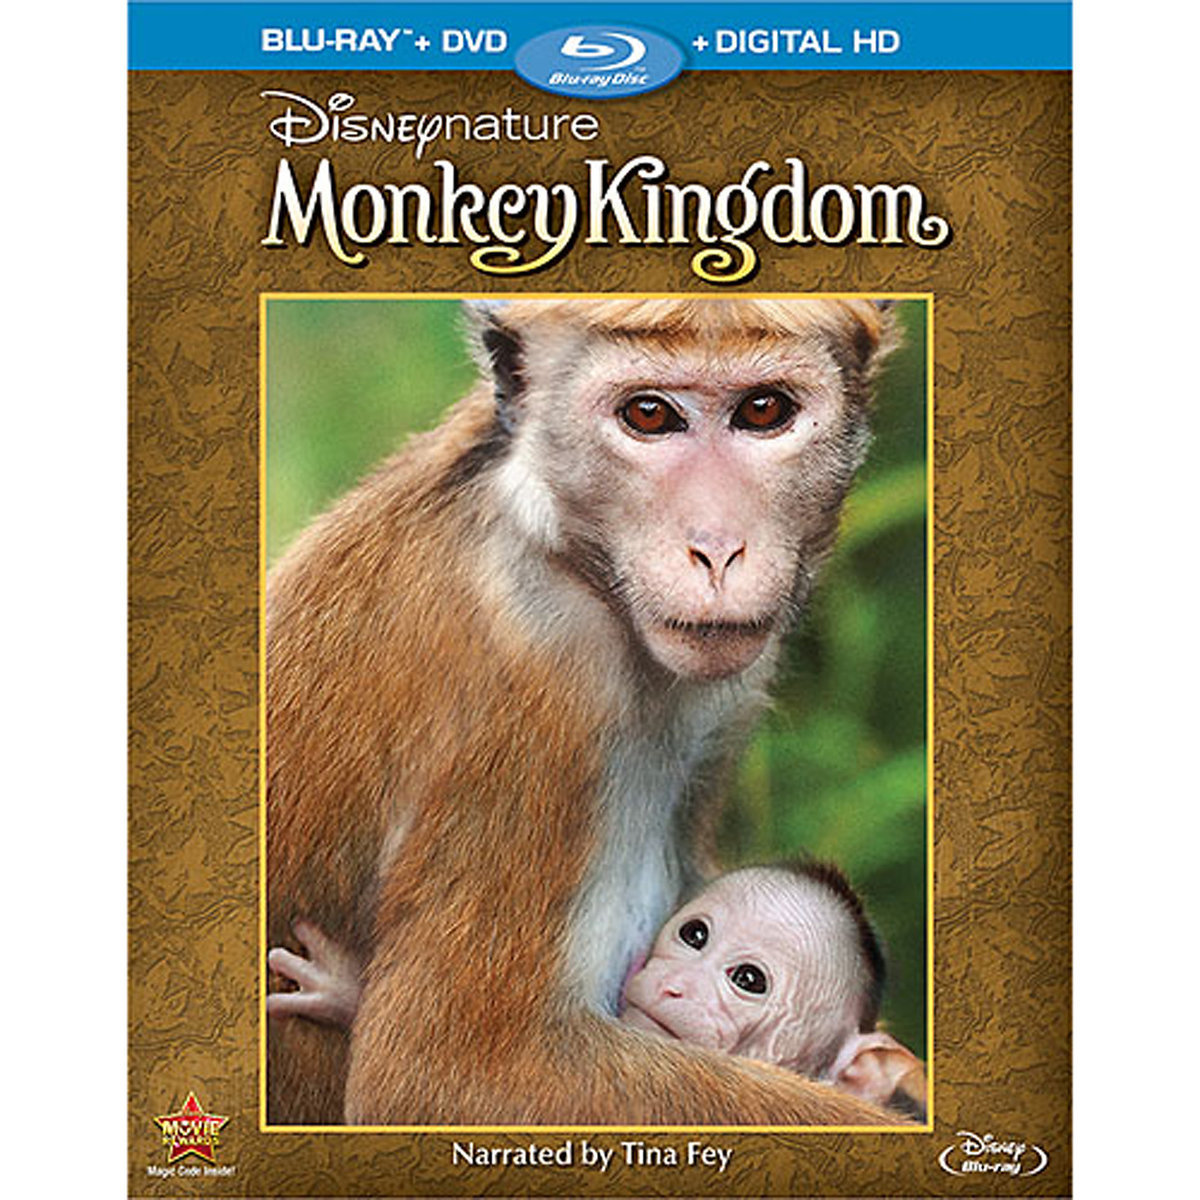 DisneyNature: Monkey Kingdom (Blu-ray + DVD + Digital HD) - image 1 of 5